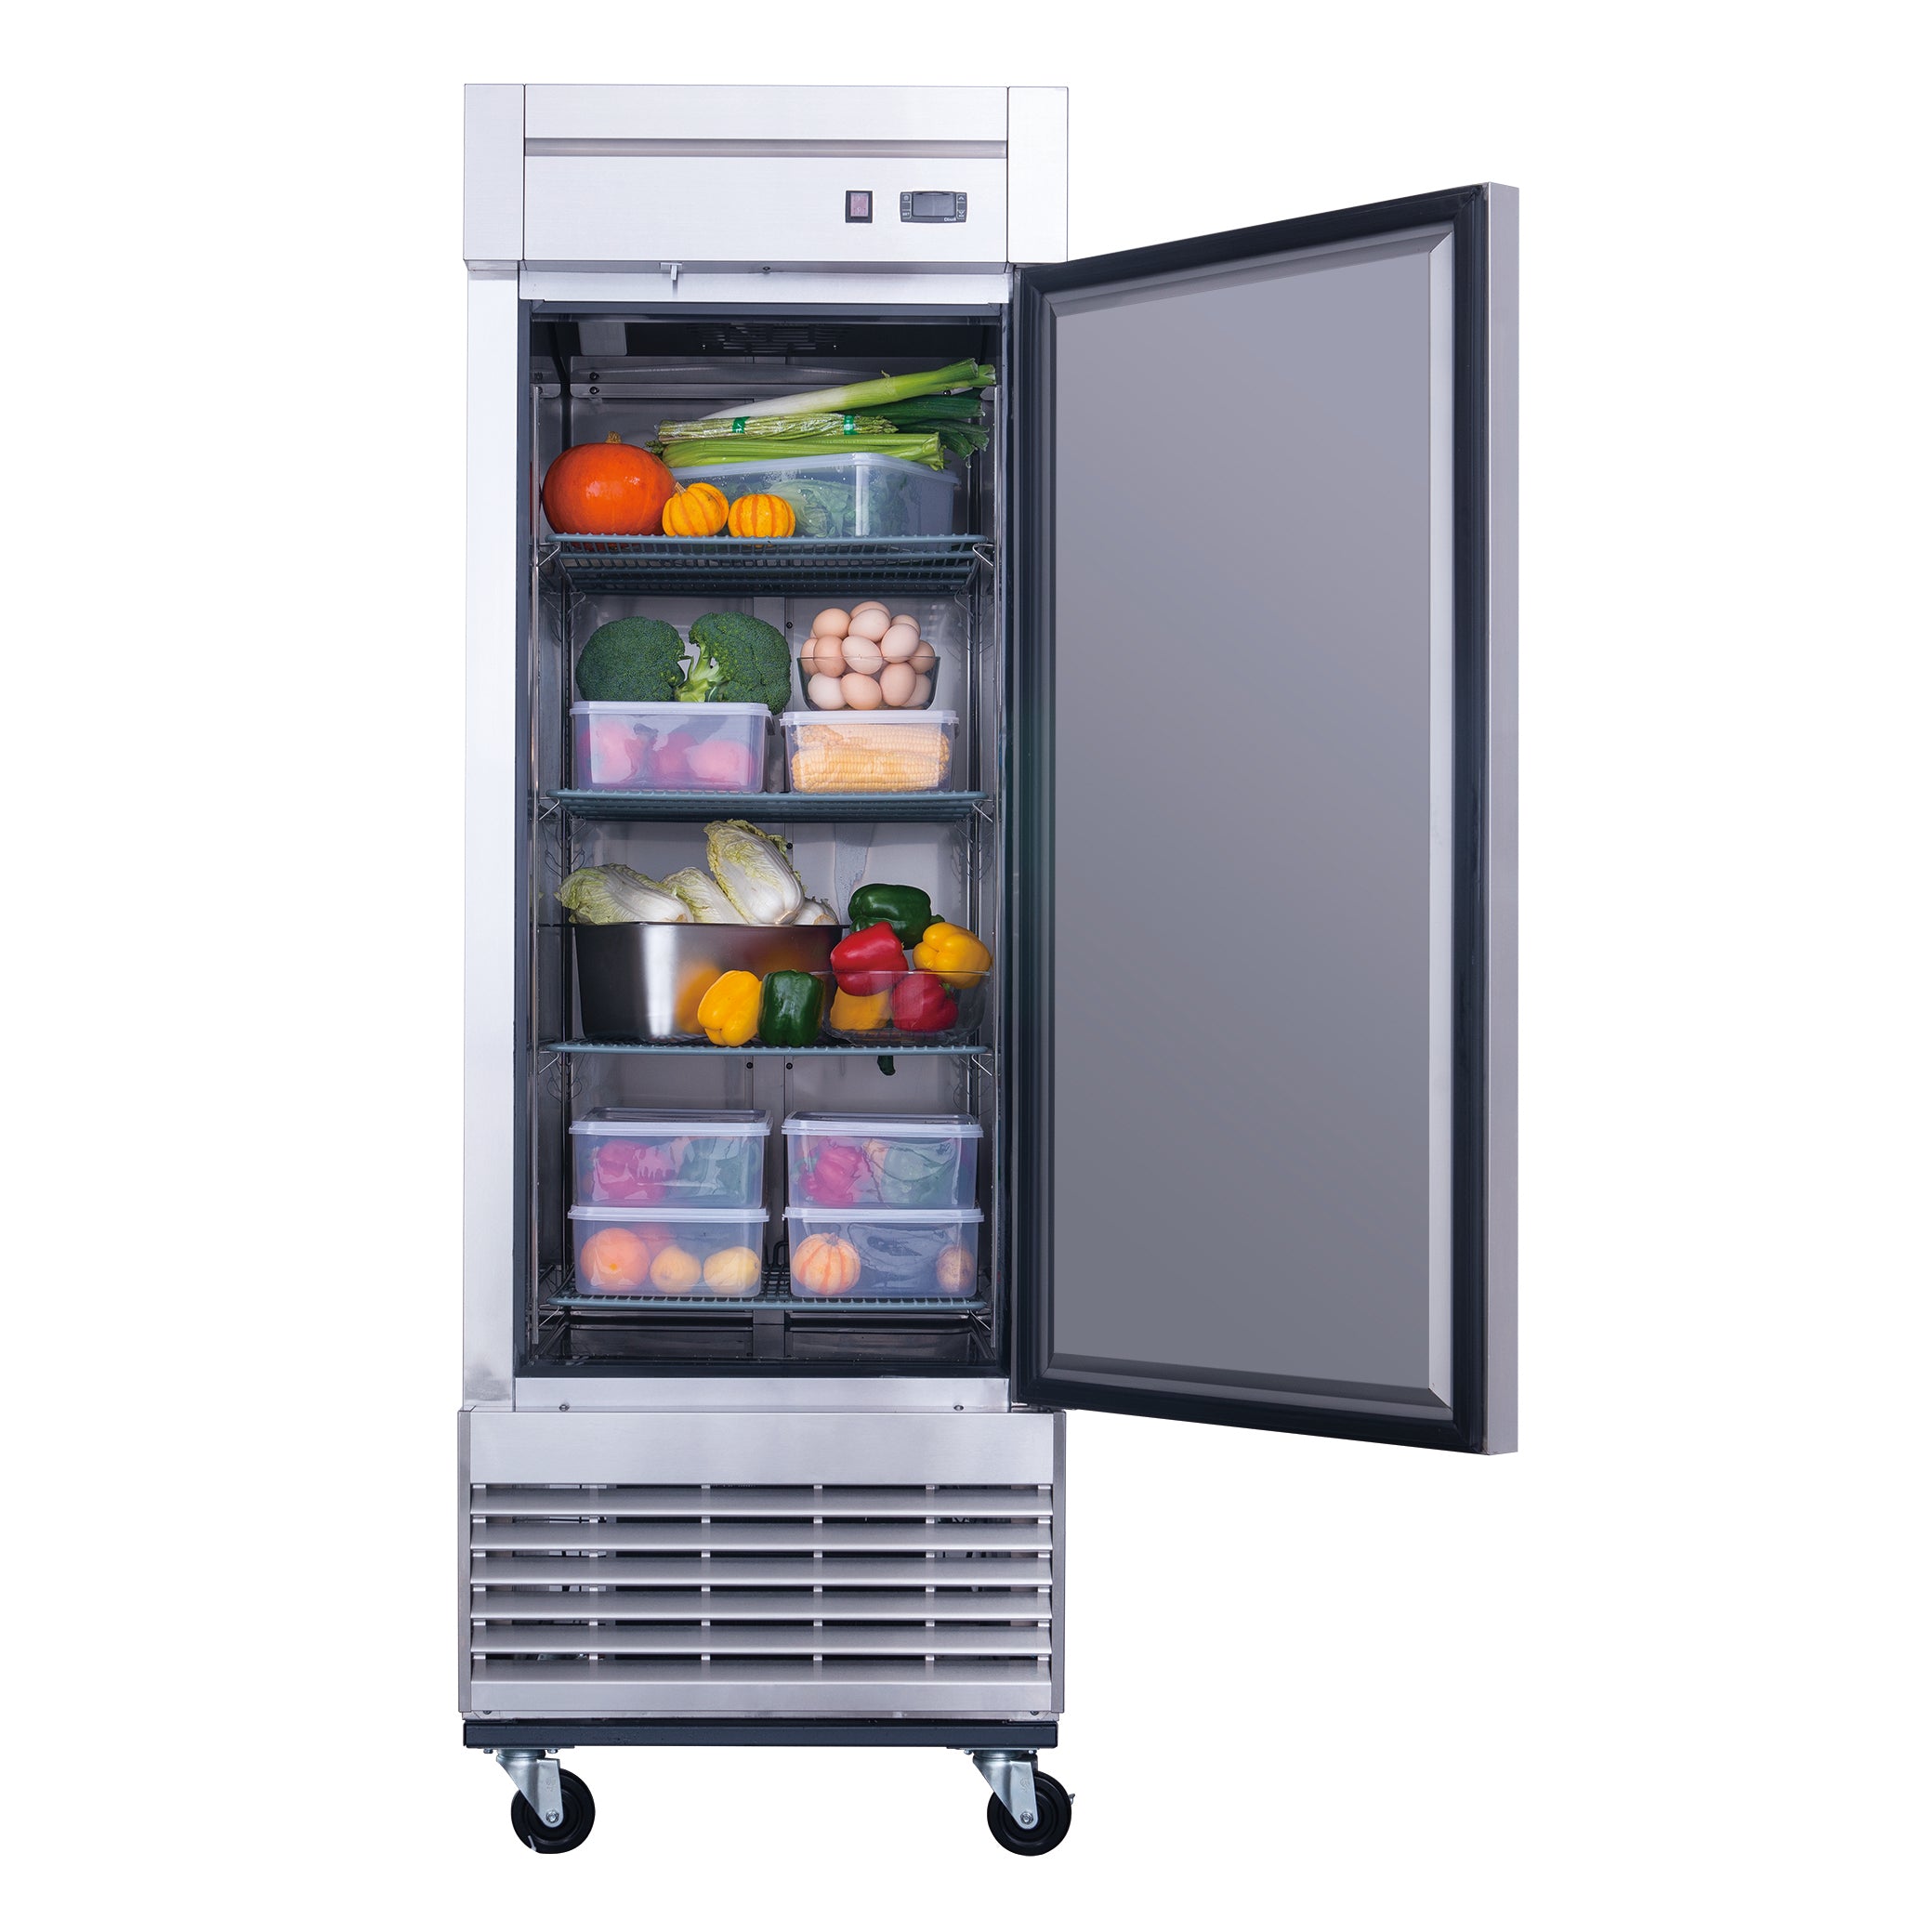 Chef AAA -T28R, Commercial 27" Reach-In Refrigerator Solid 1 Door 17.7 cu.ft.